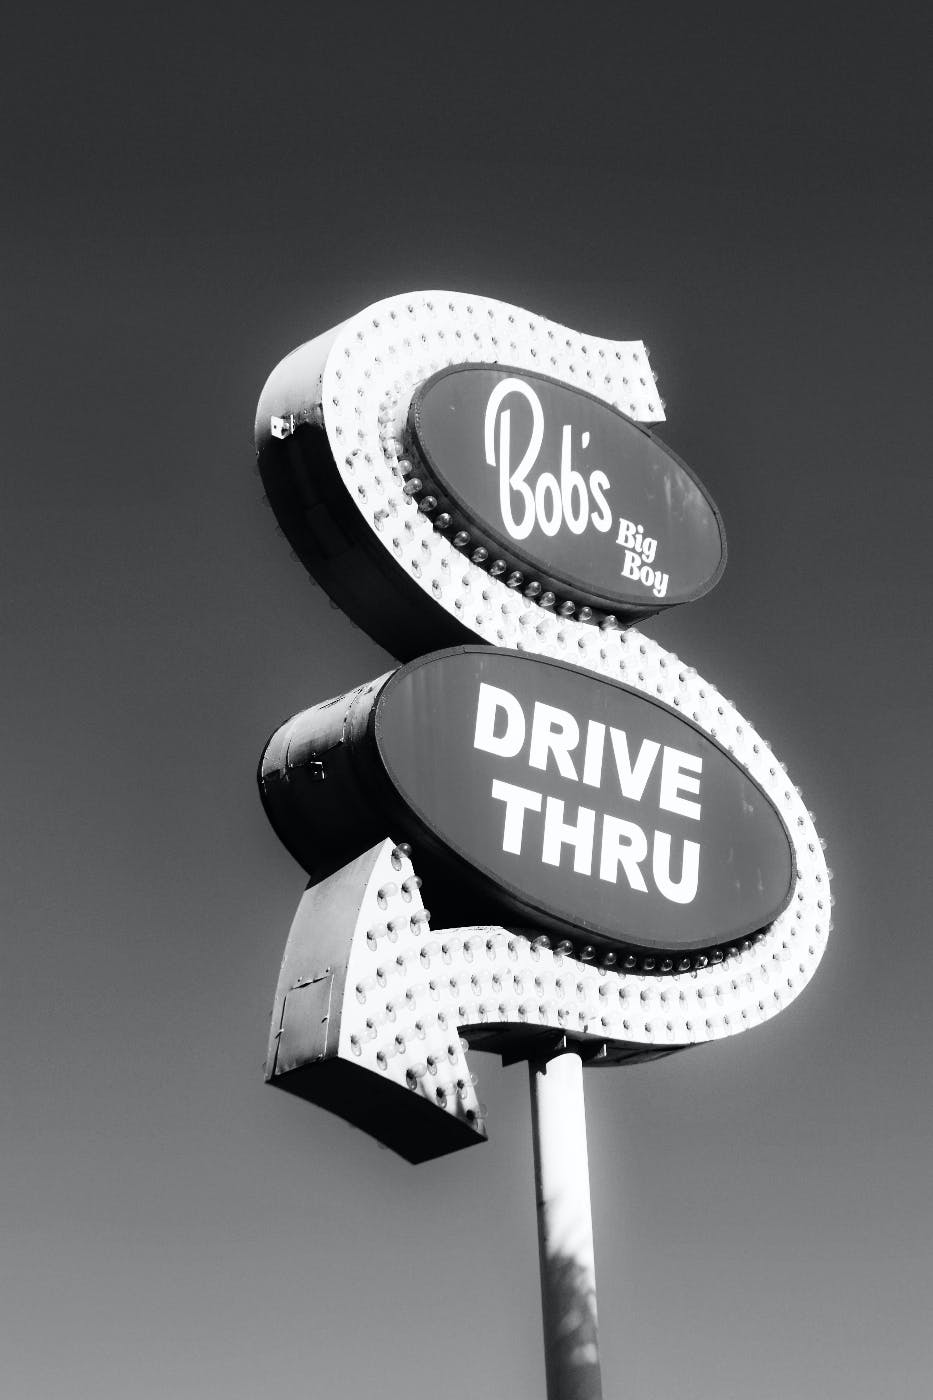 A Bob's Big Boy drive thru sign